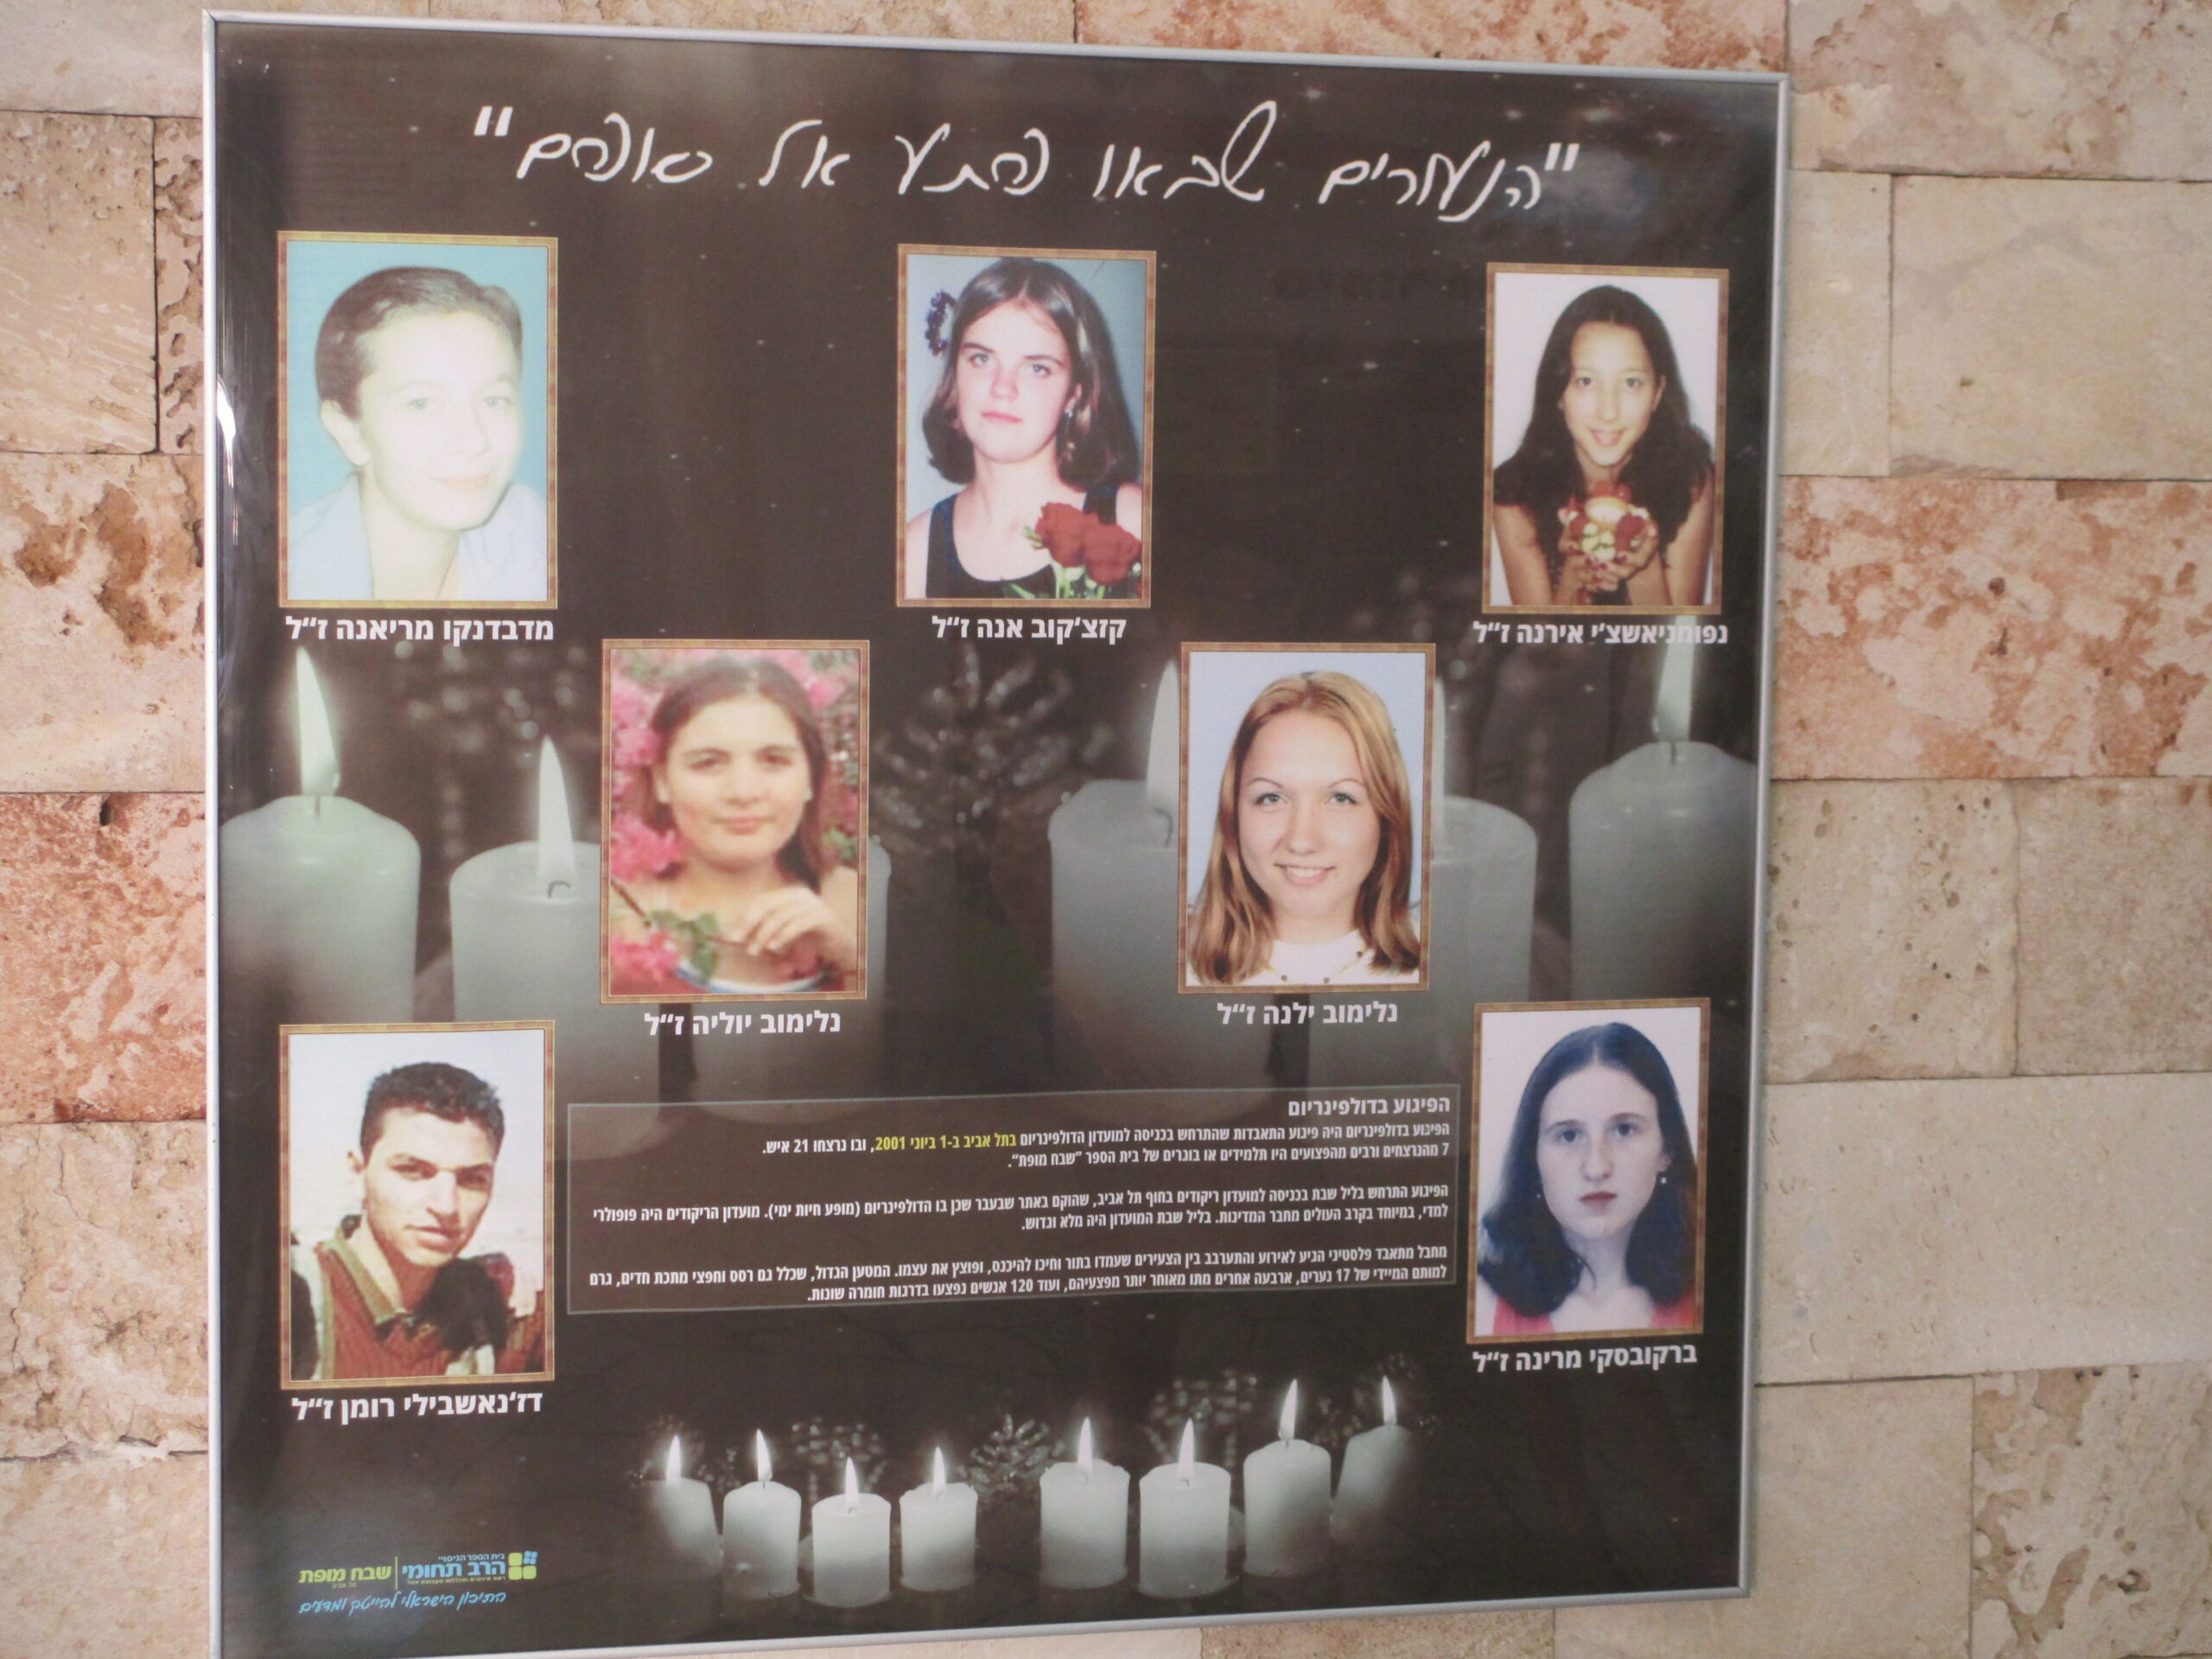 Dolpharium Massacre Memorial in Shevack Mofet School - podcast episode on the West Bank separation barrier